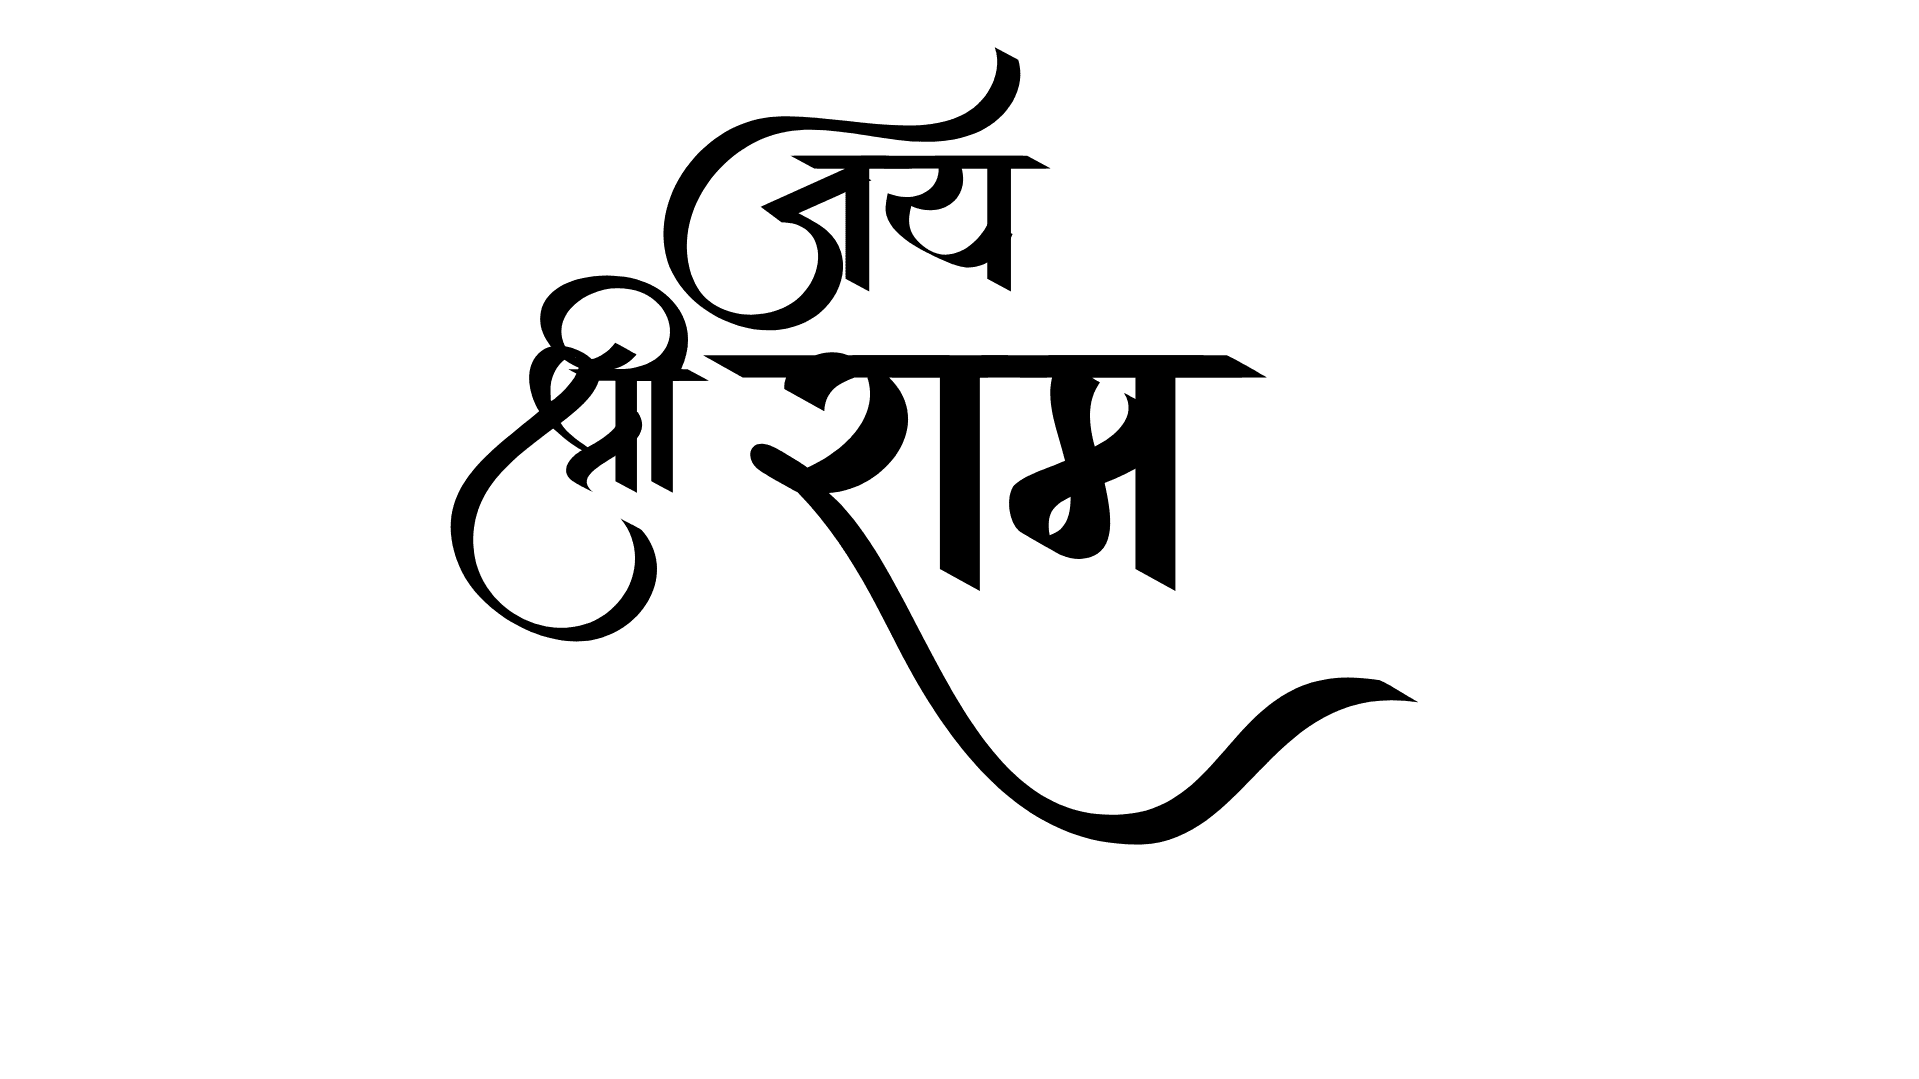 Jai Shri Ram: Honouring Lord Ram's Sacred Name